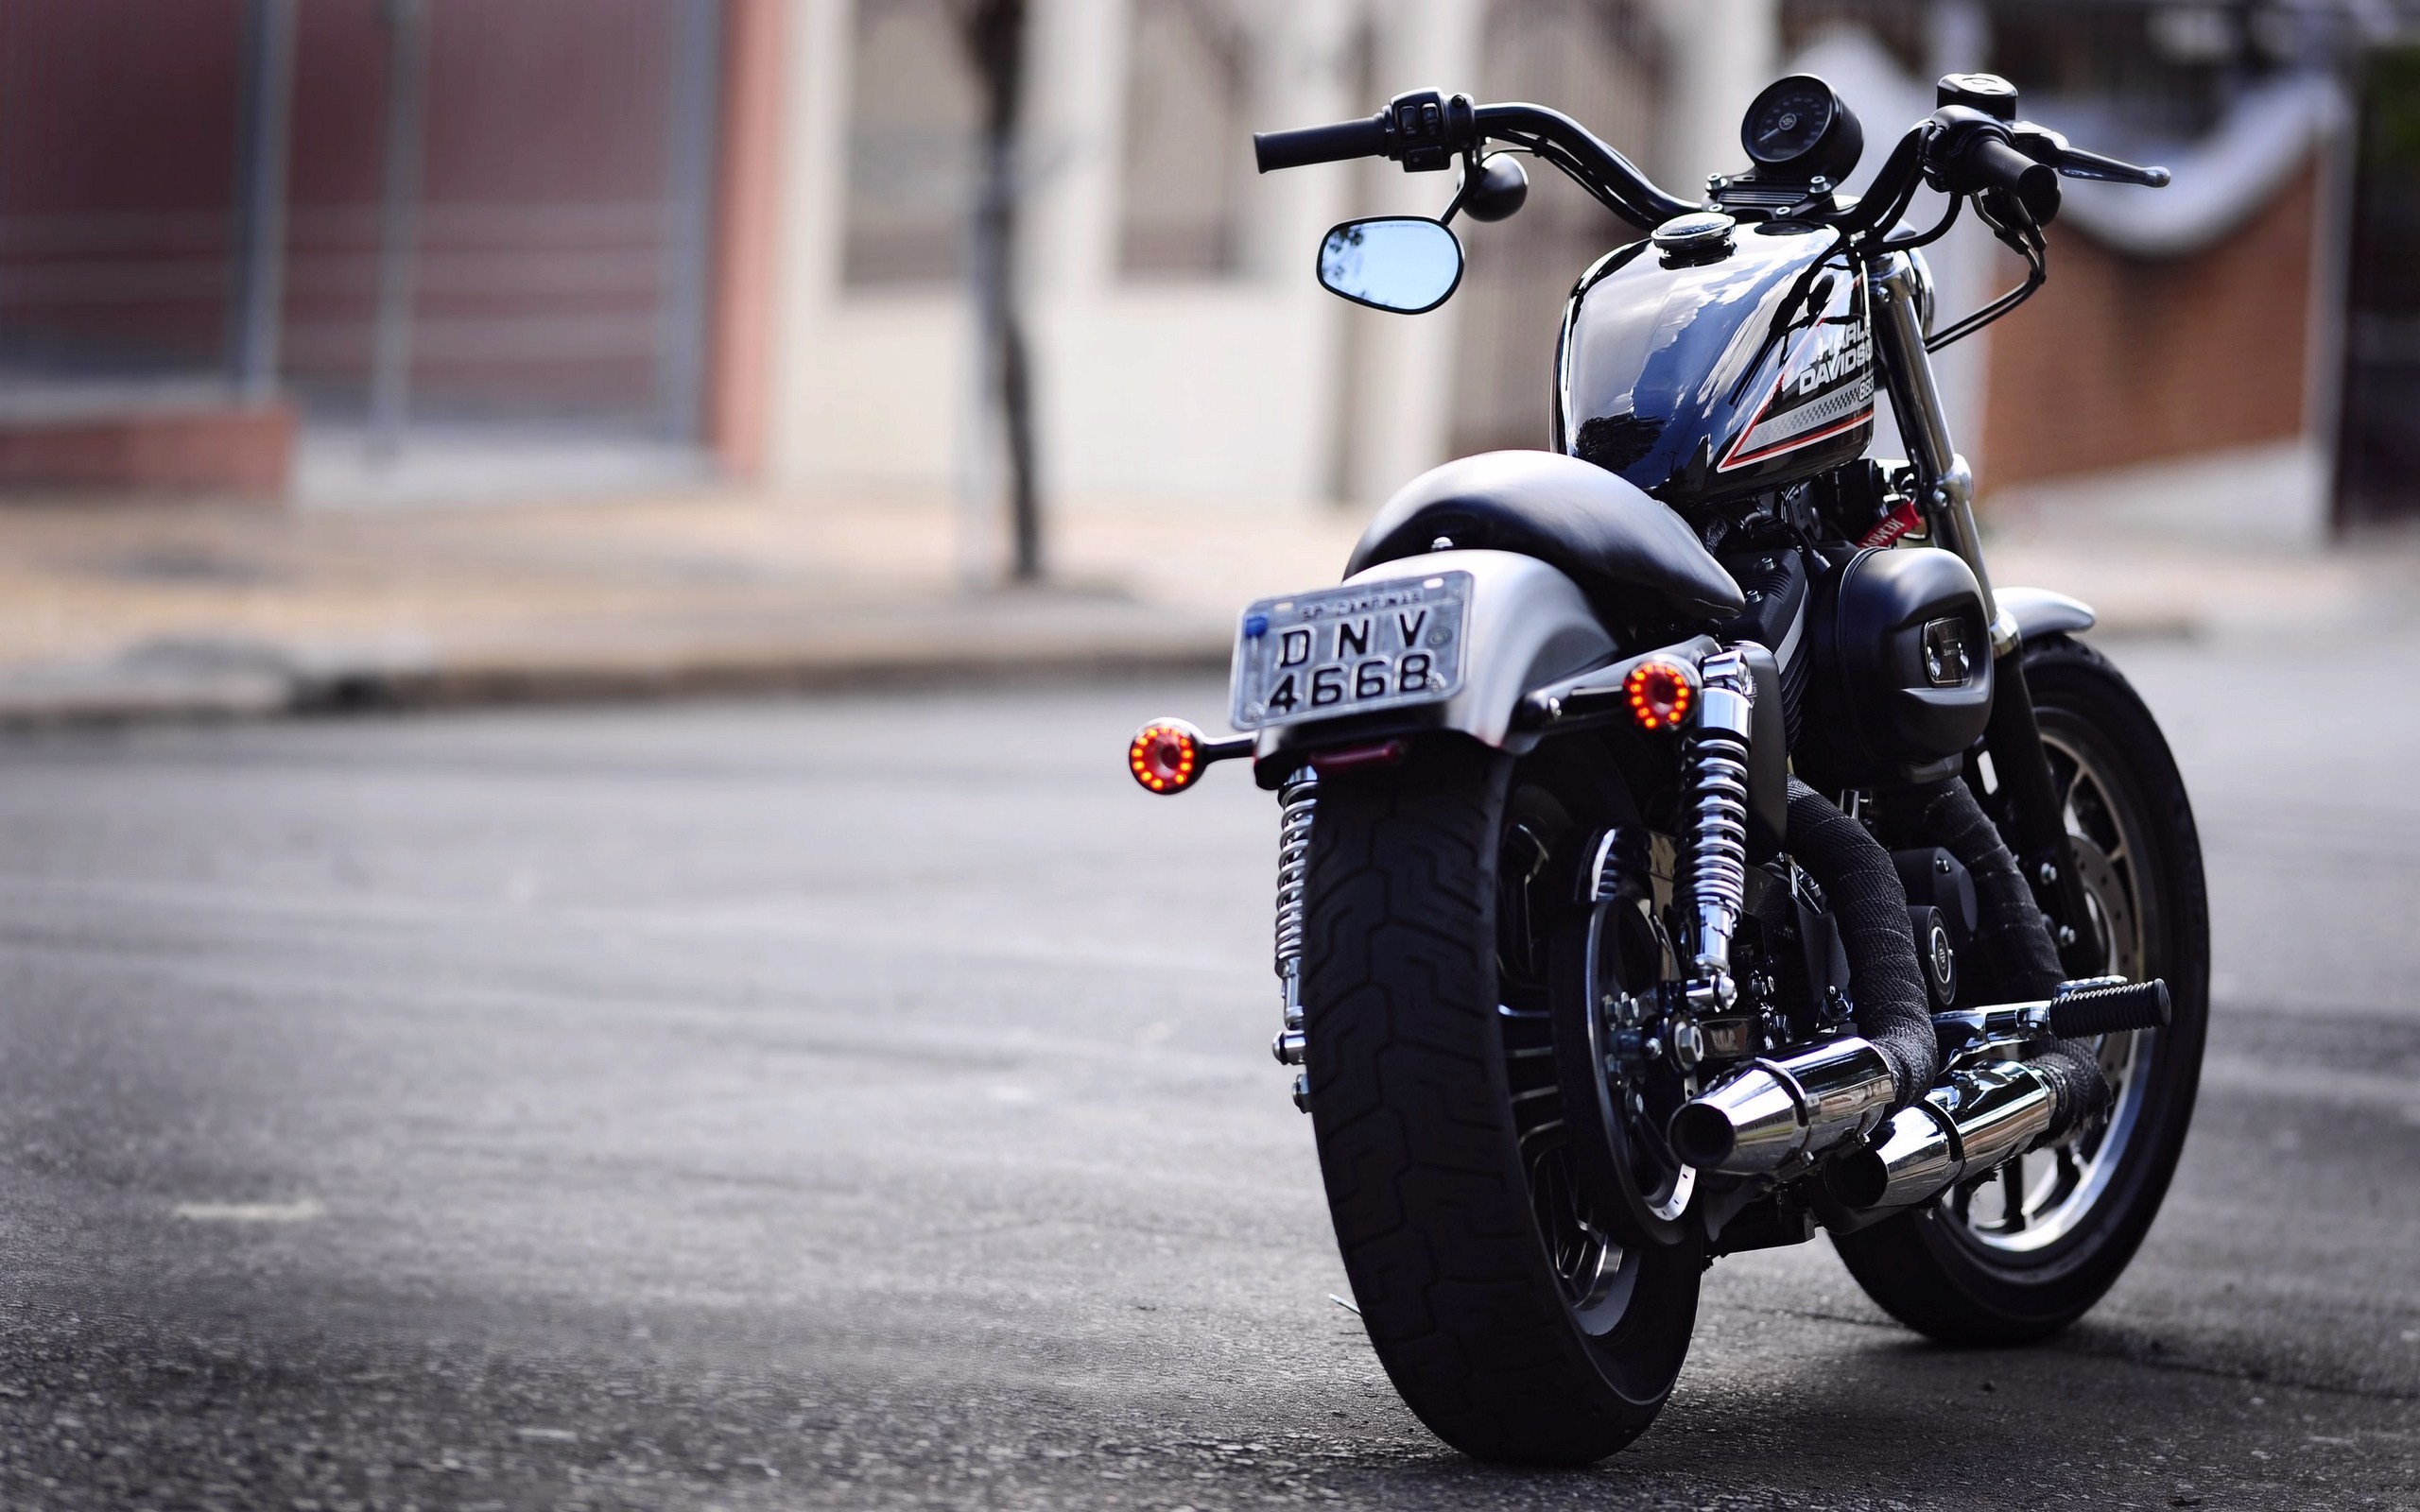 HD Wallpaper Motorcycle Harley Davidson